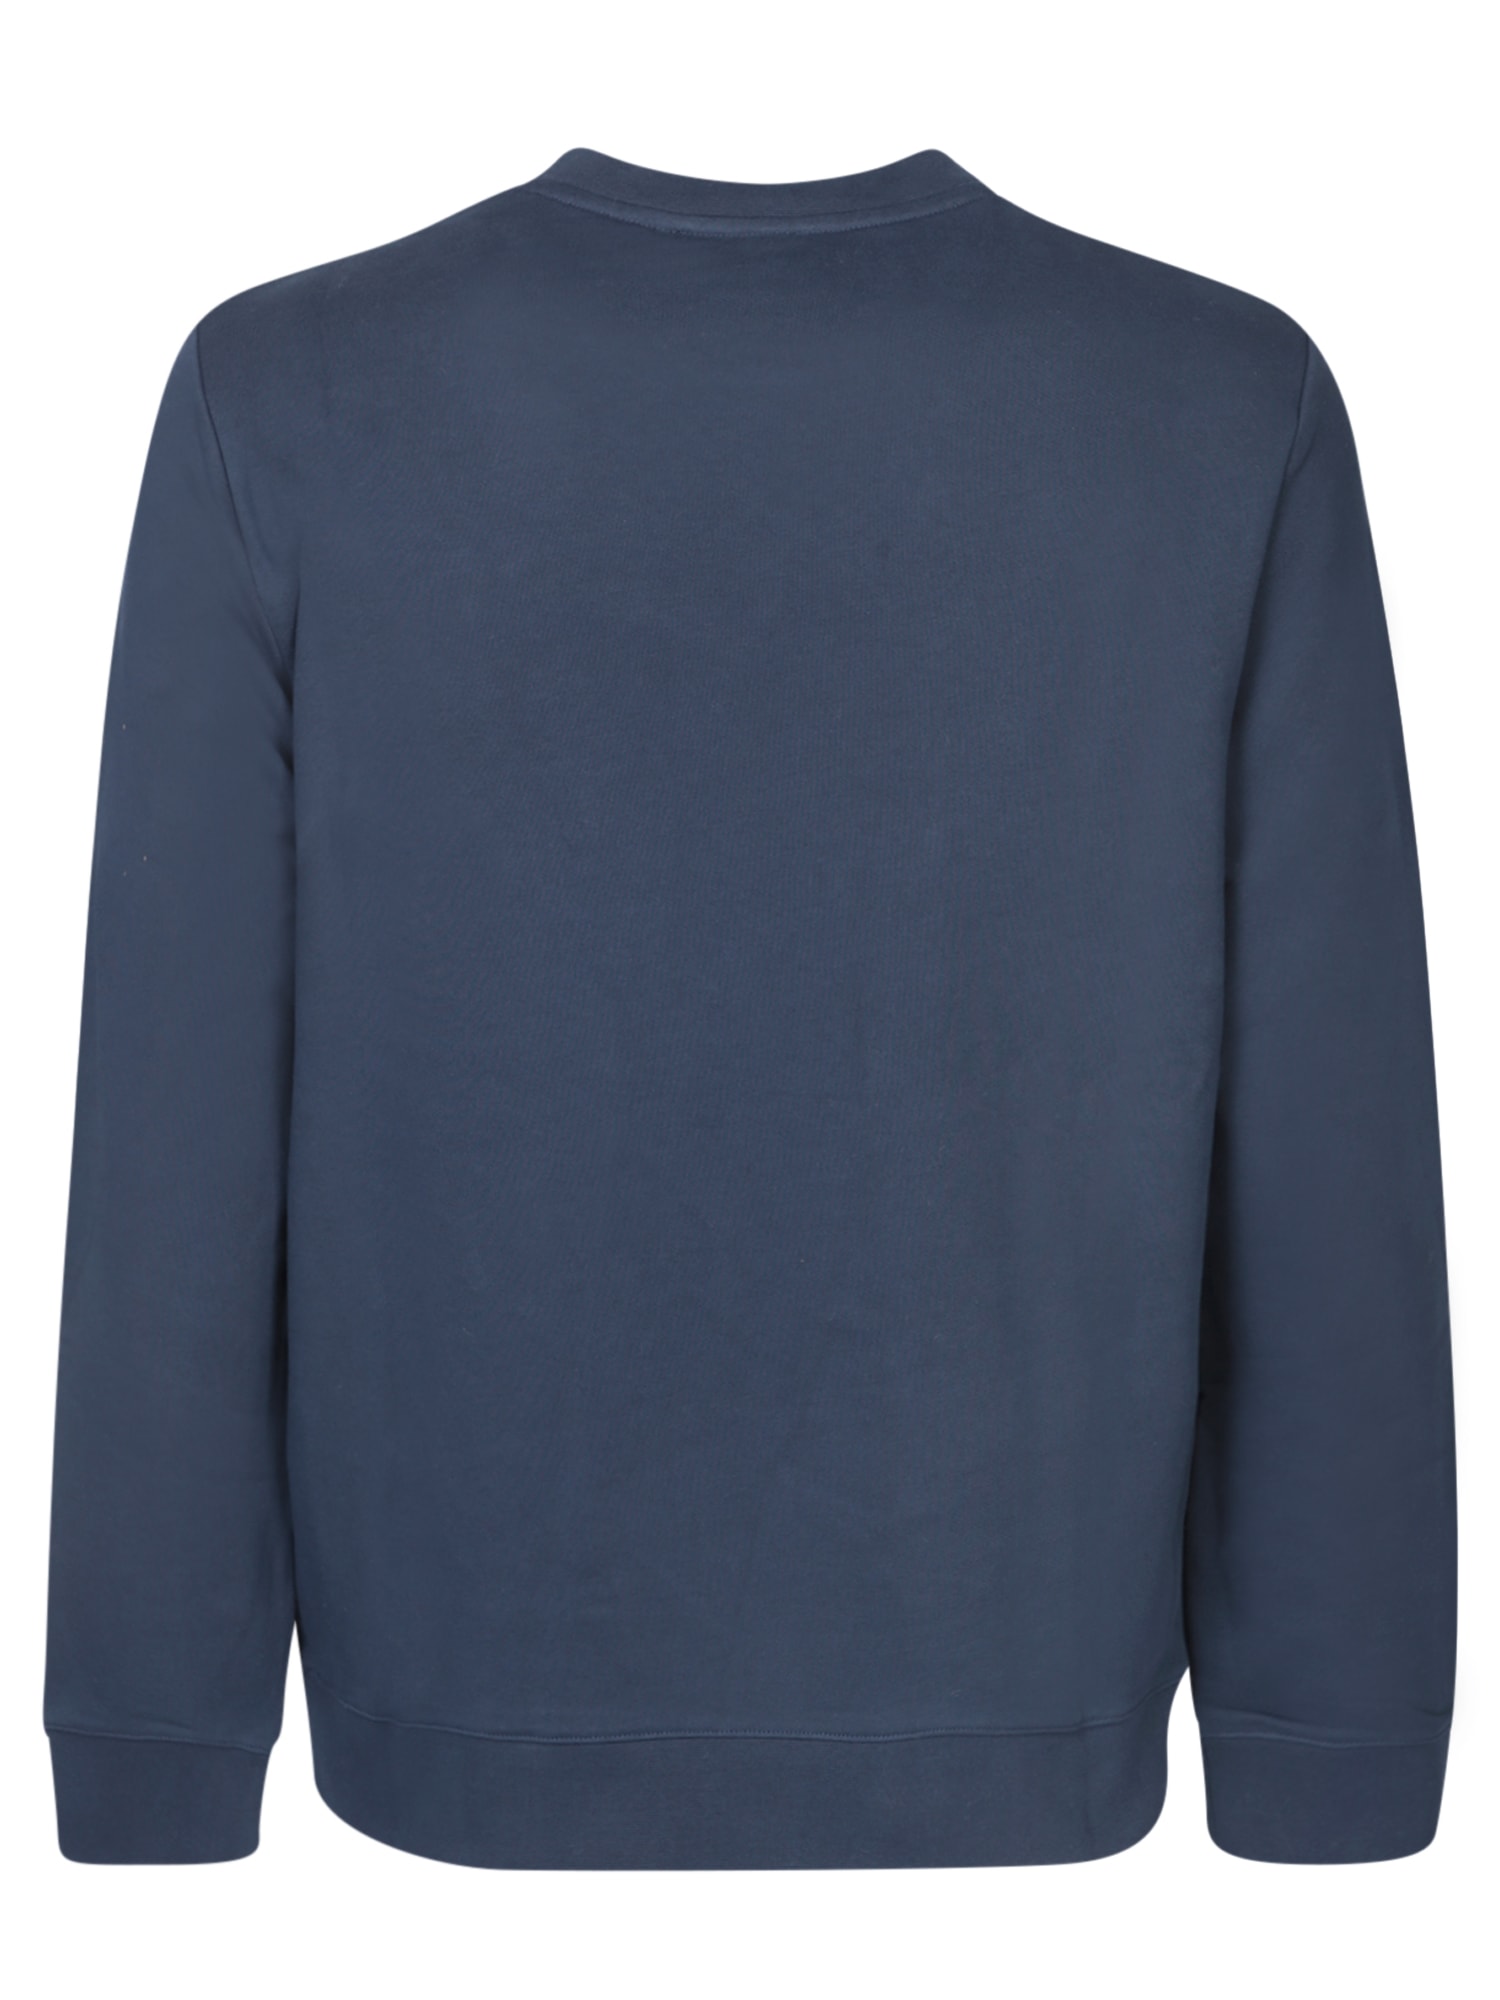 Shop Apc Rider Blue Sweatshirt